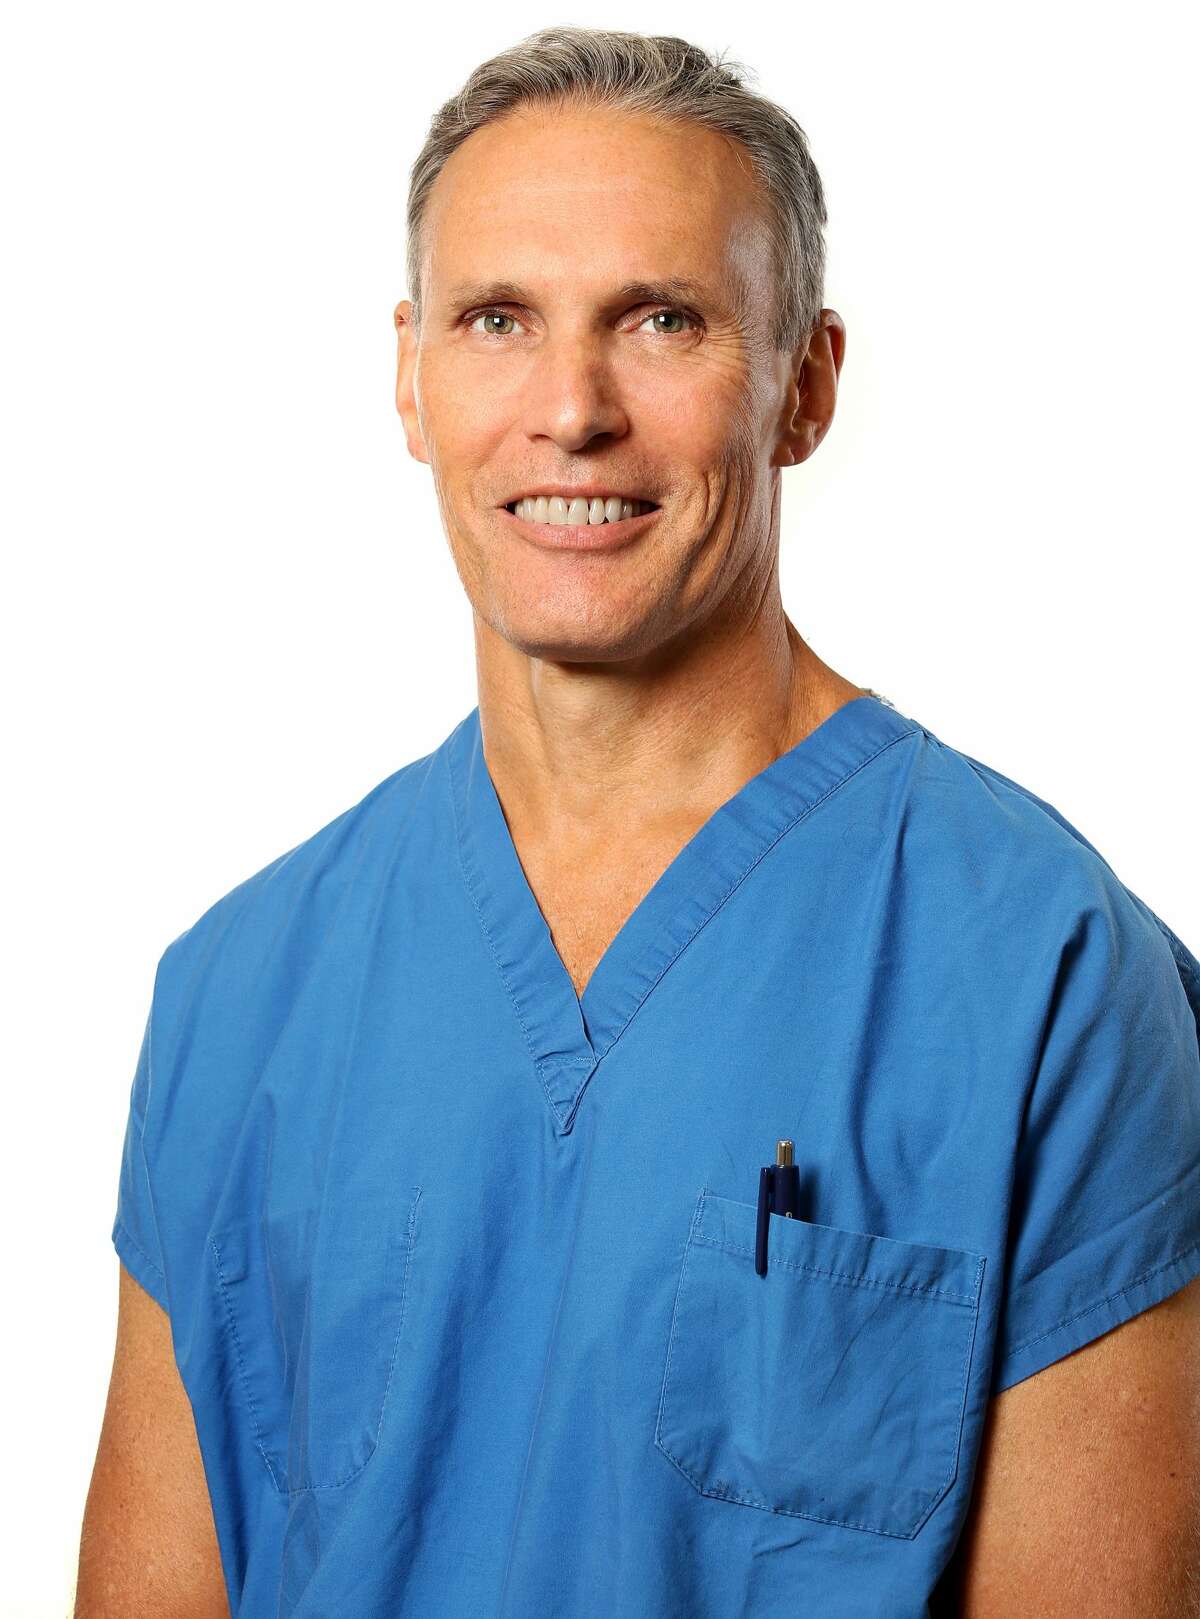 Dr. Daniel Southern of Interventional Orthopedics CT.